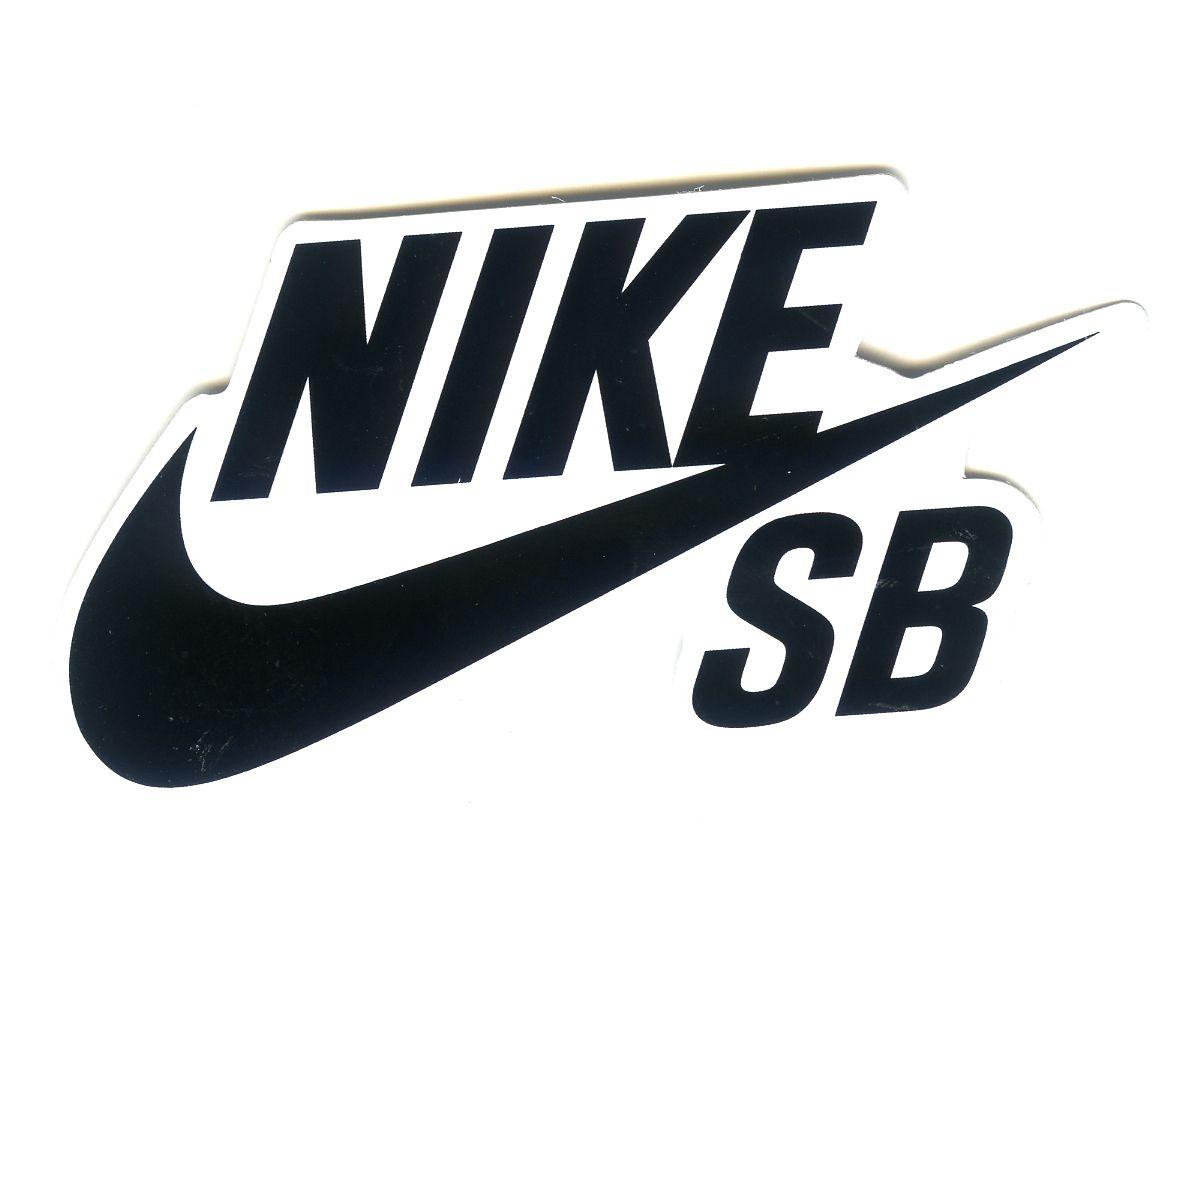 Nike Monster Energy Logo - 1586 NIKE SB Black logo 9x4.5 cm decal sticker in 2019 | สติ๊กเกอร์ ...